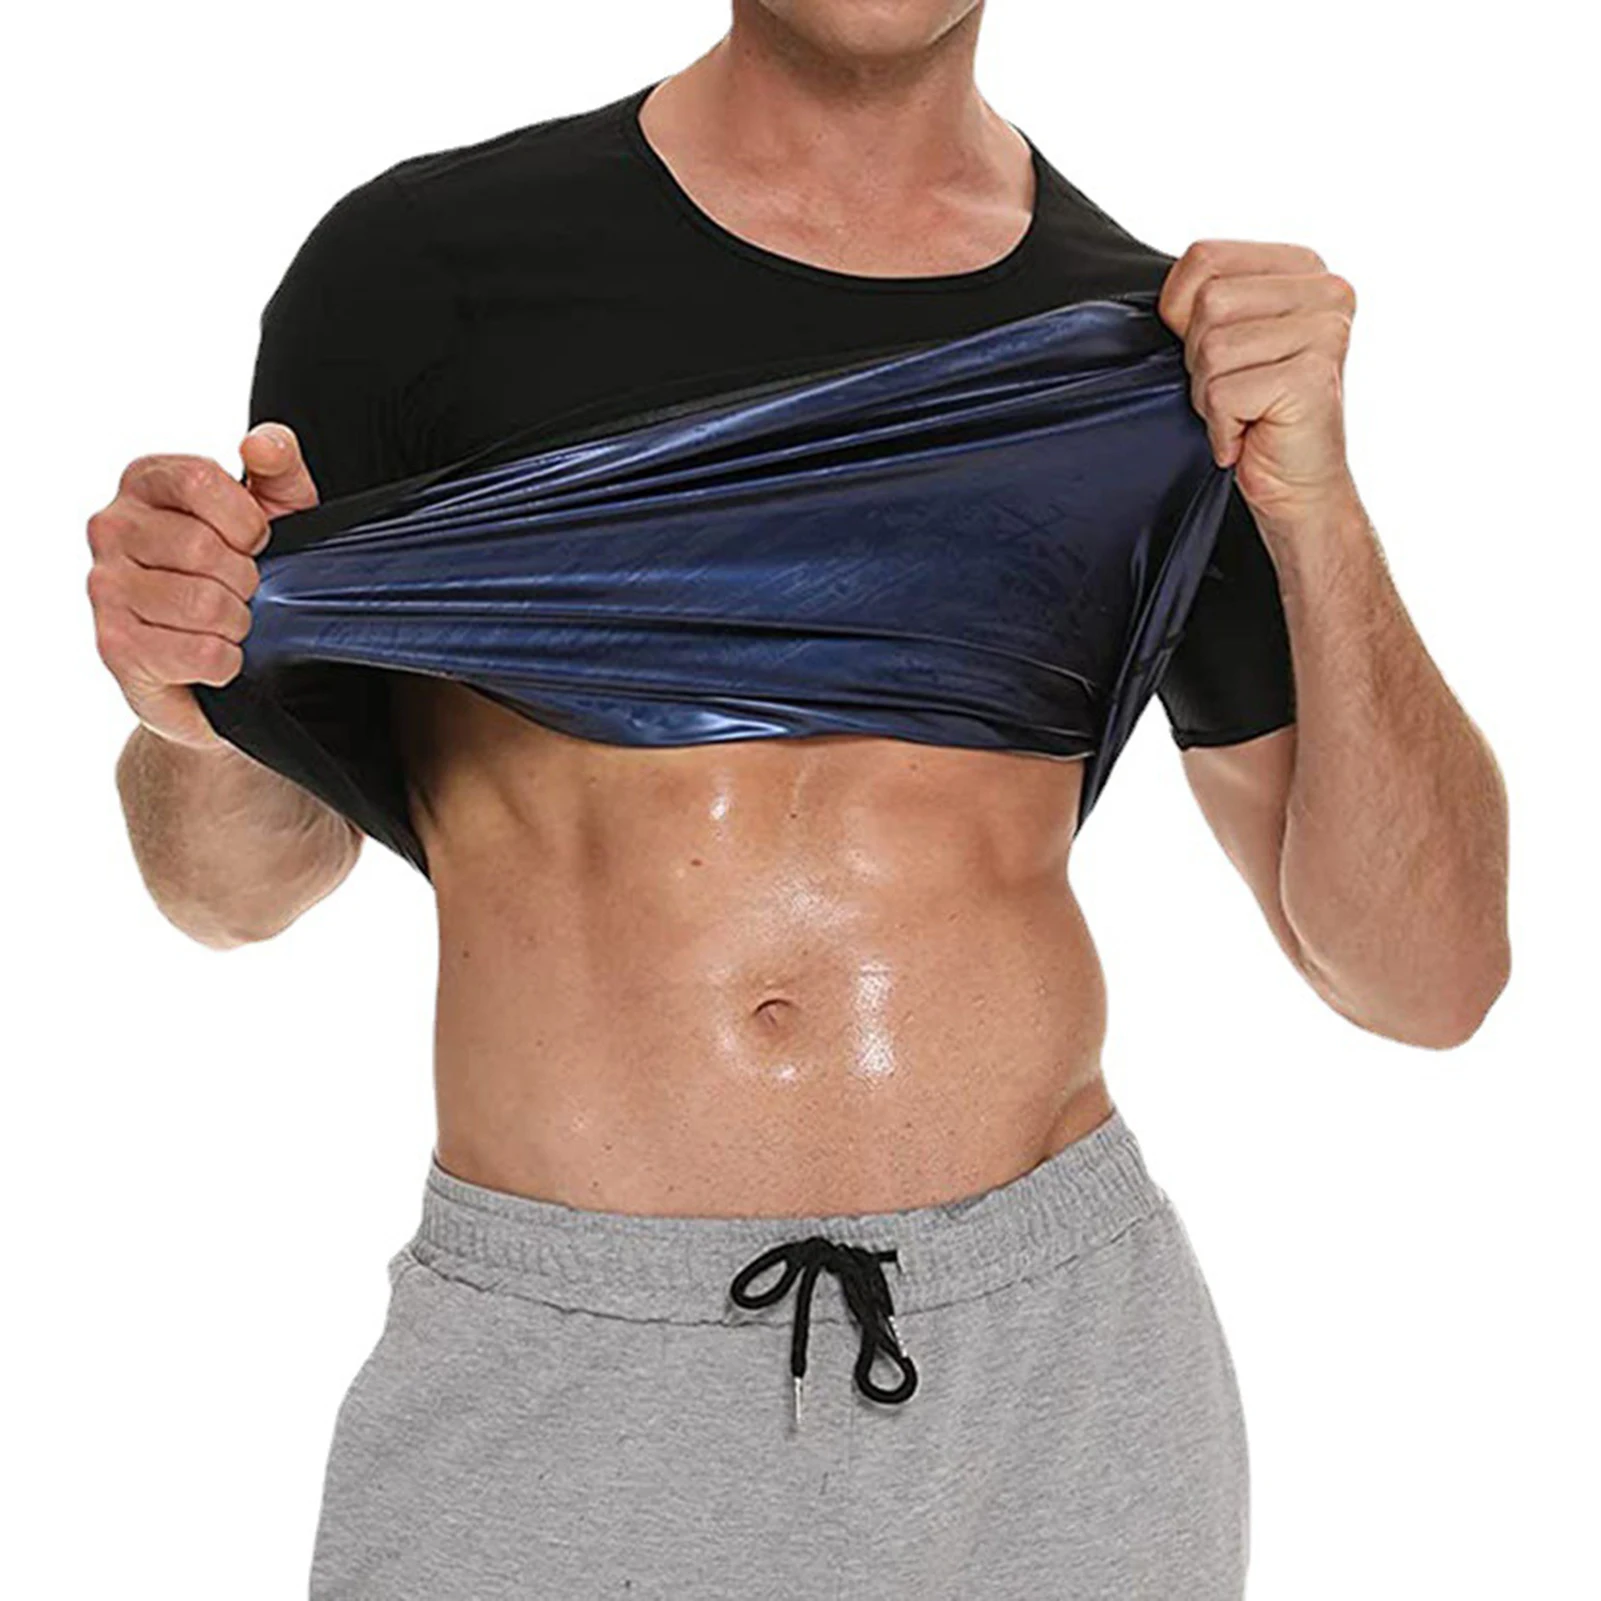 

Men's Heat Trapping Shirt Sweat Body Shaper Vest Waist Slimmer Sauna Effect Suits Shapewear Compression Top Gym T-Shirt Helpful